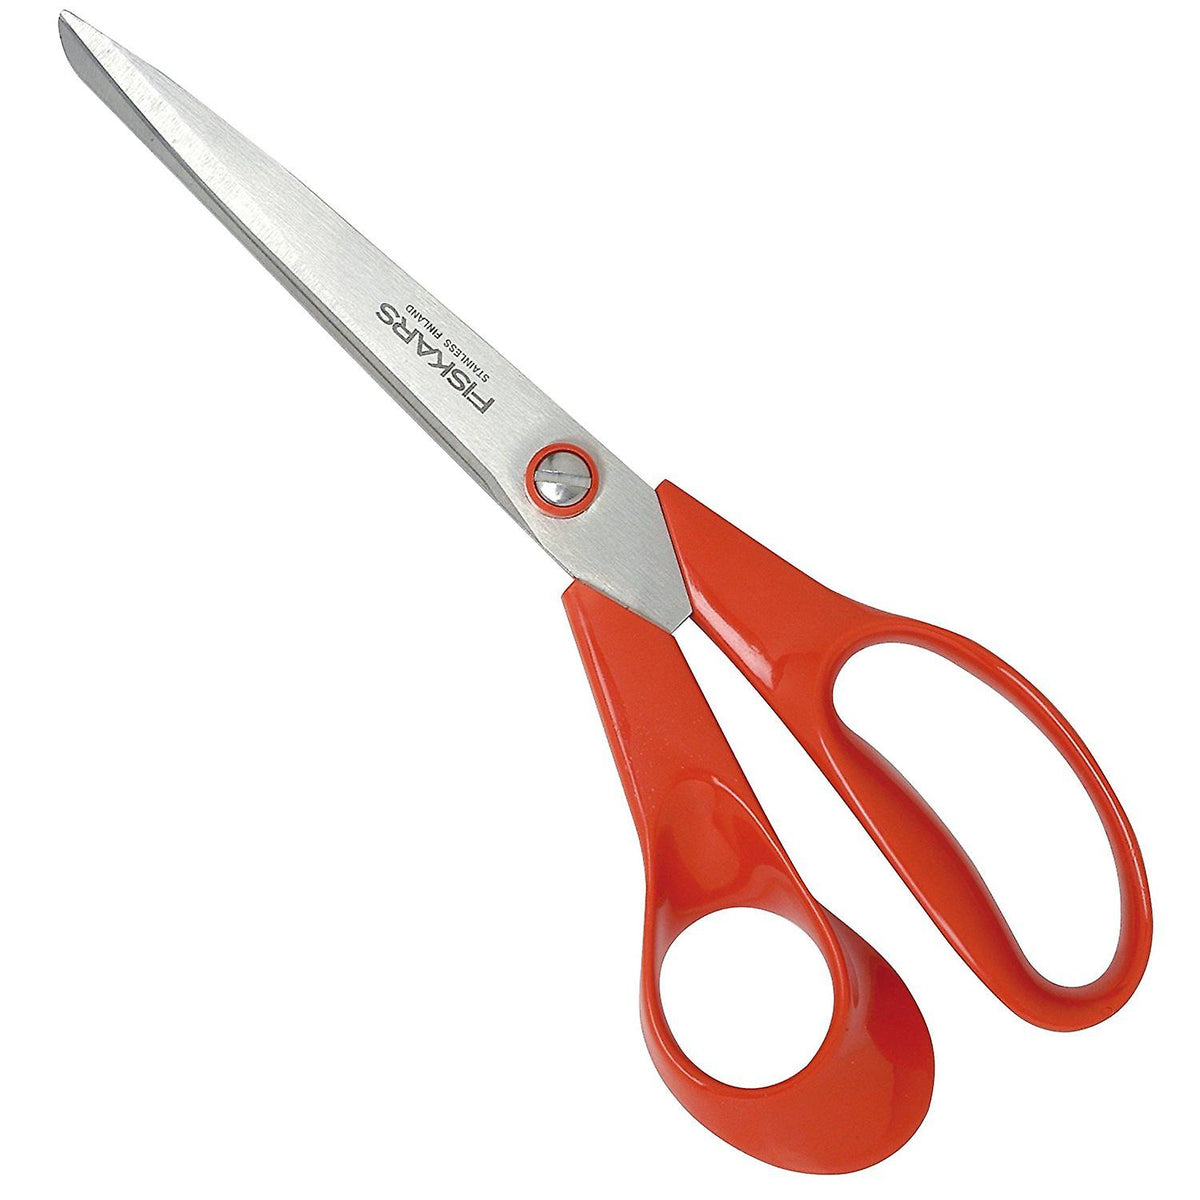  Fiskars All-Purpose Left-Handed Scissors